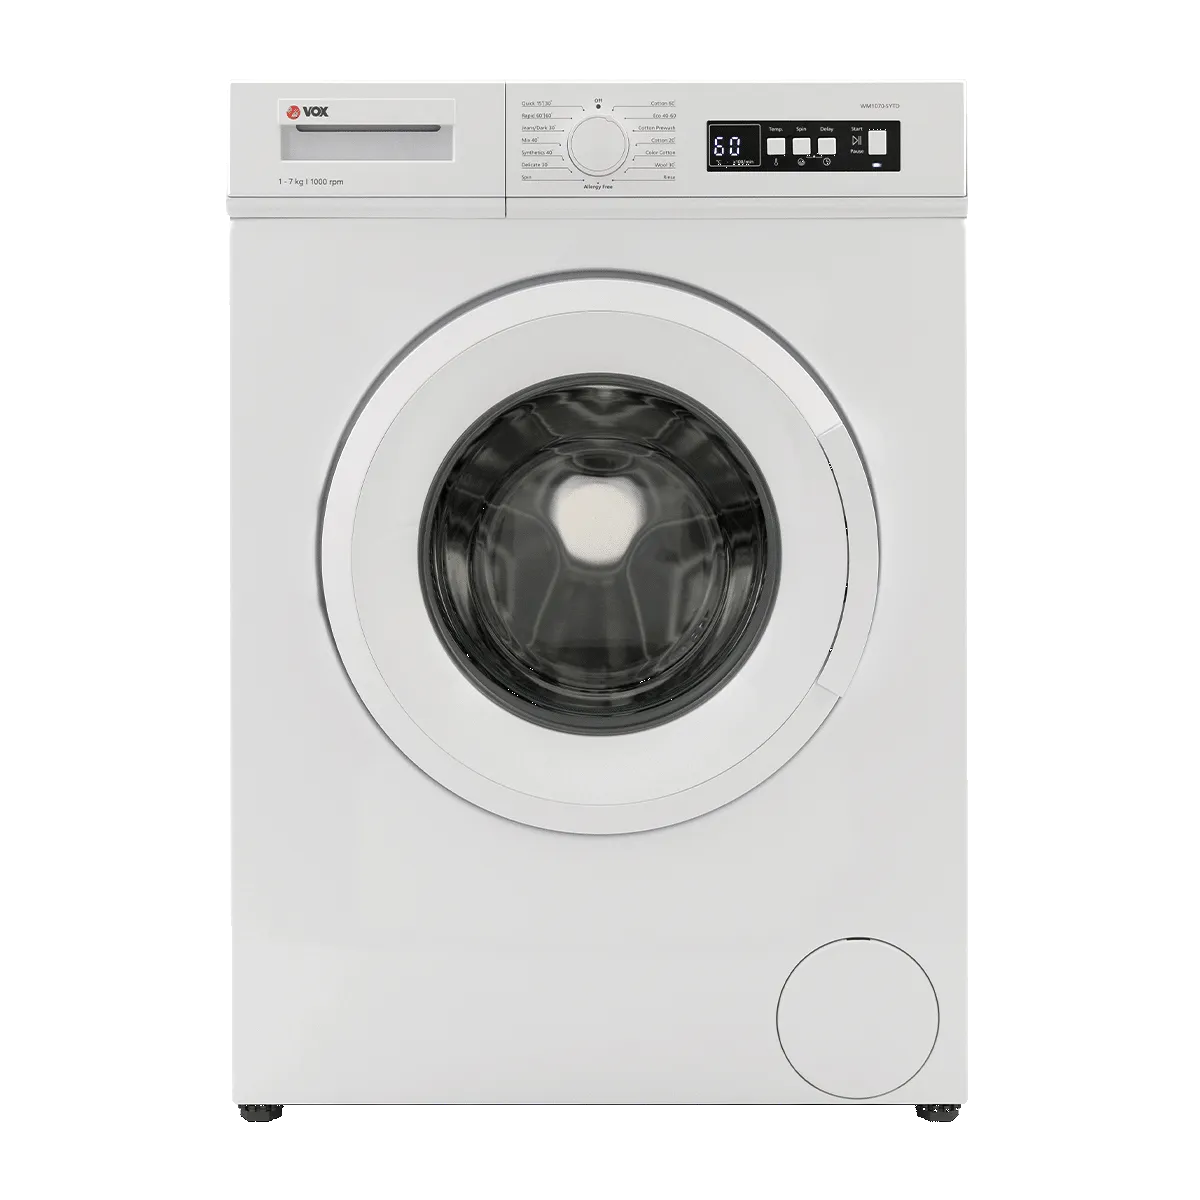 Washing machine WM1070-SYTD 